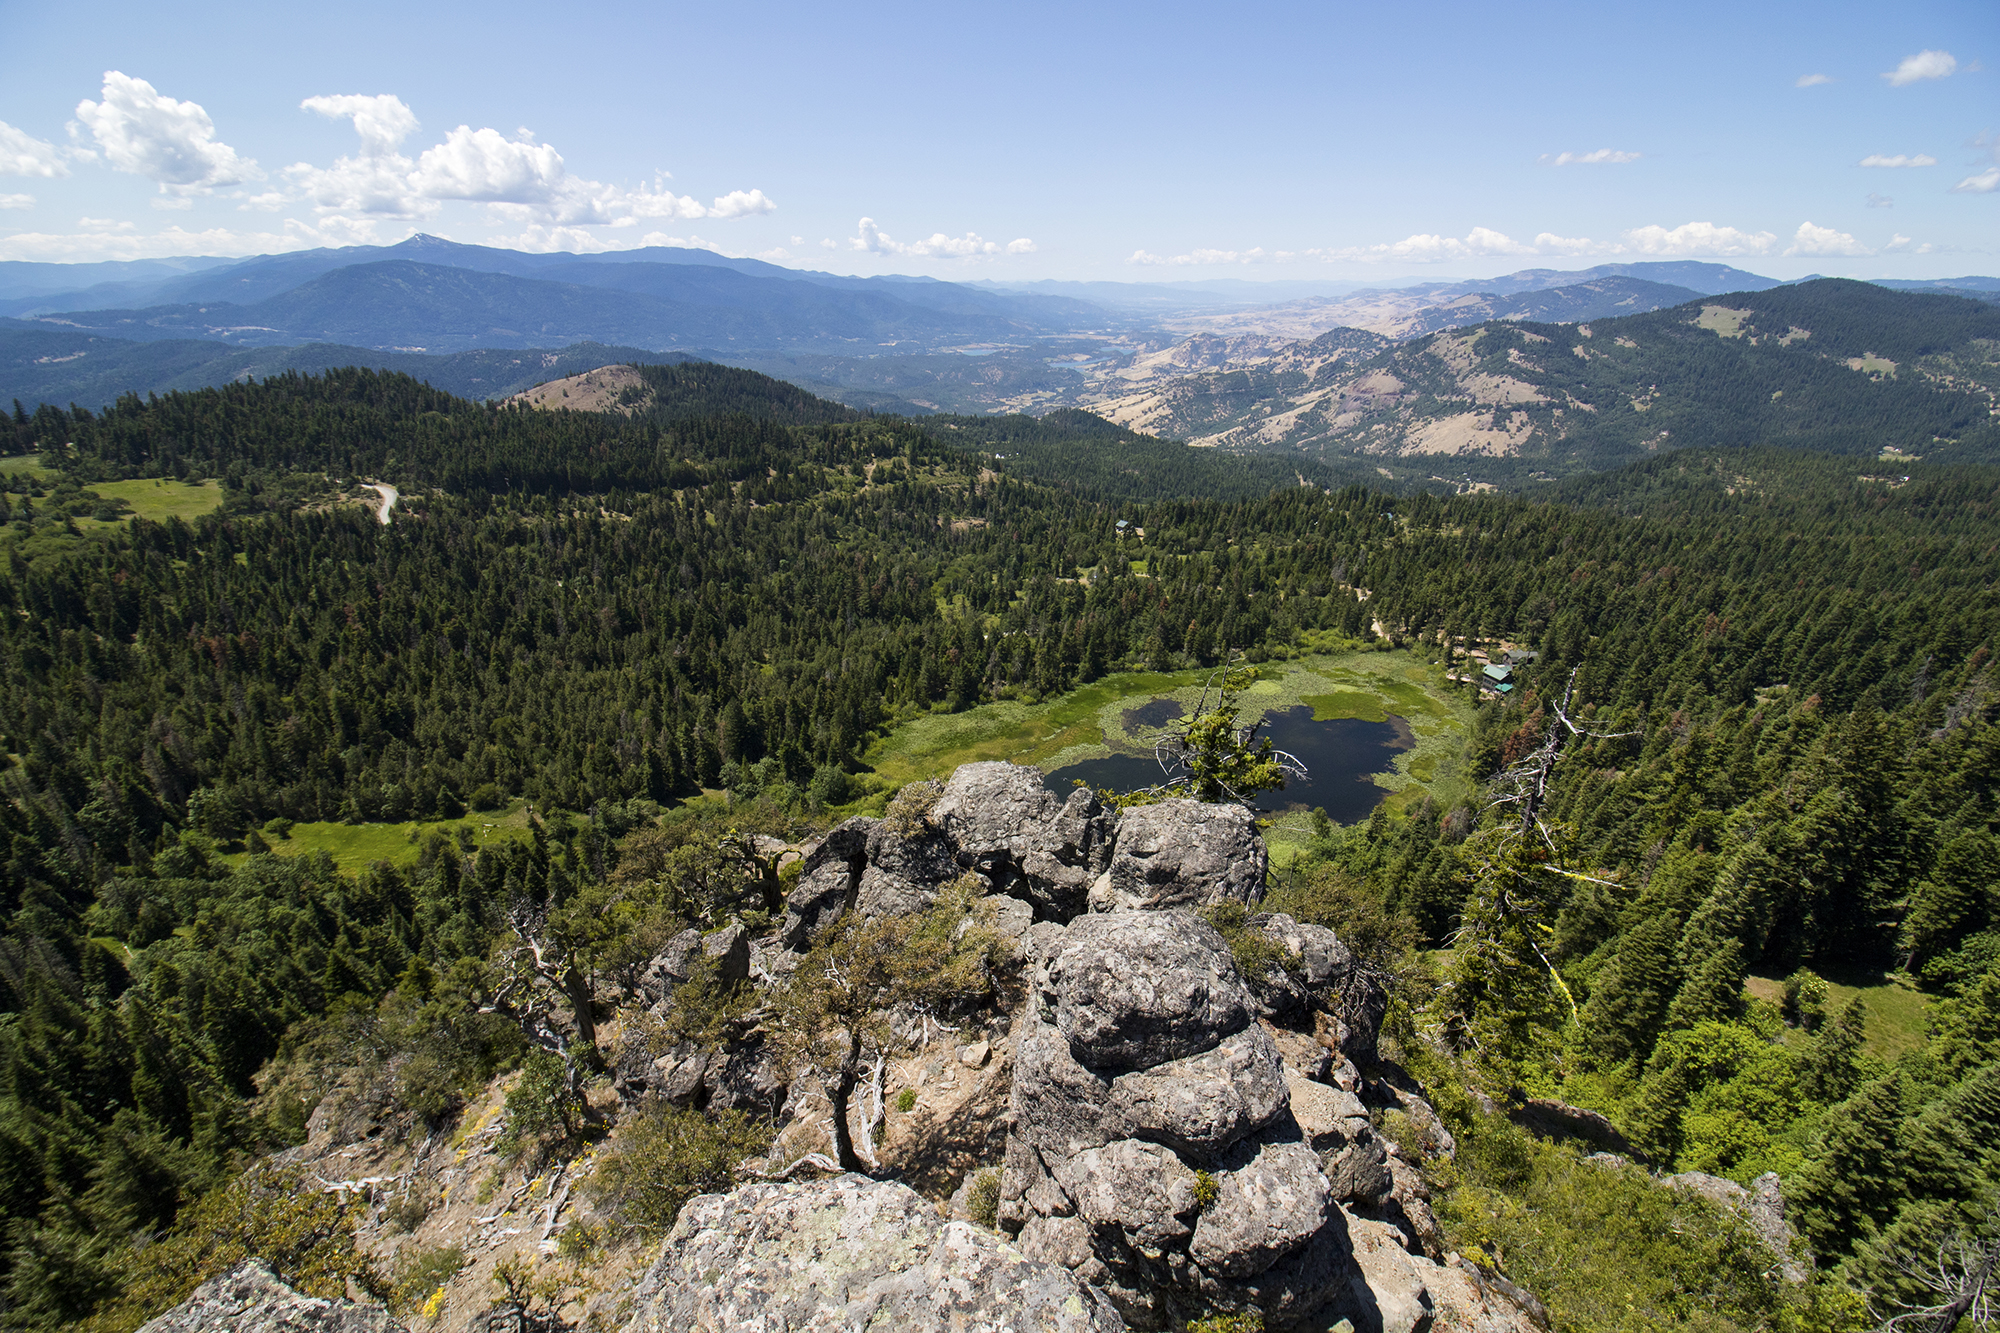 File:Rogue River Oregon USA.jpg - Wikipedia